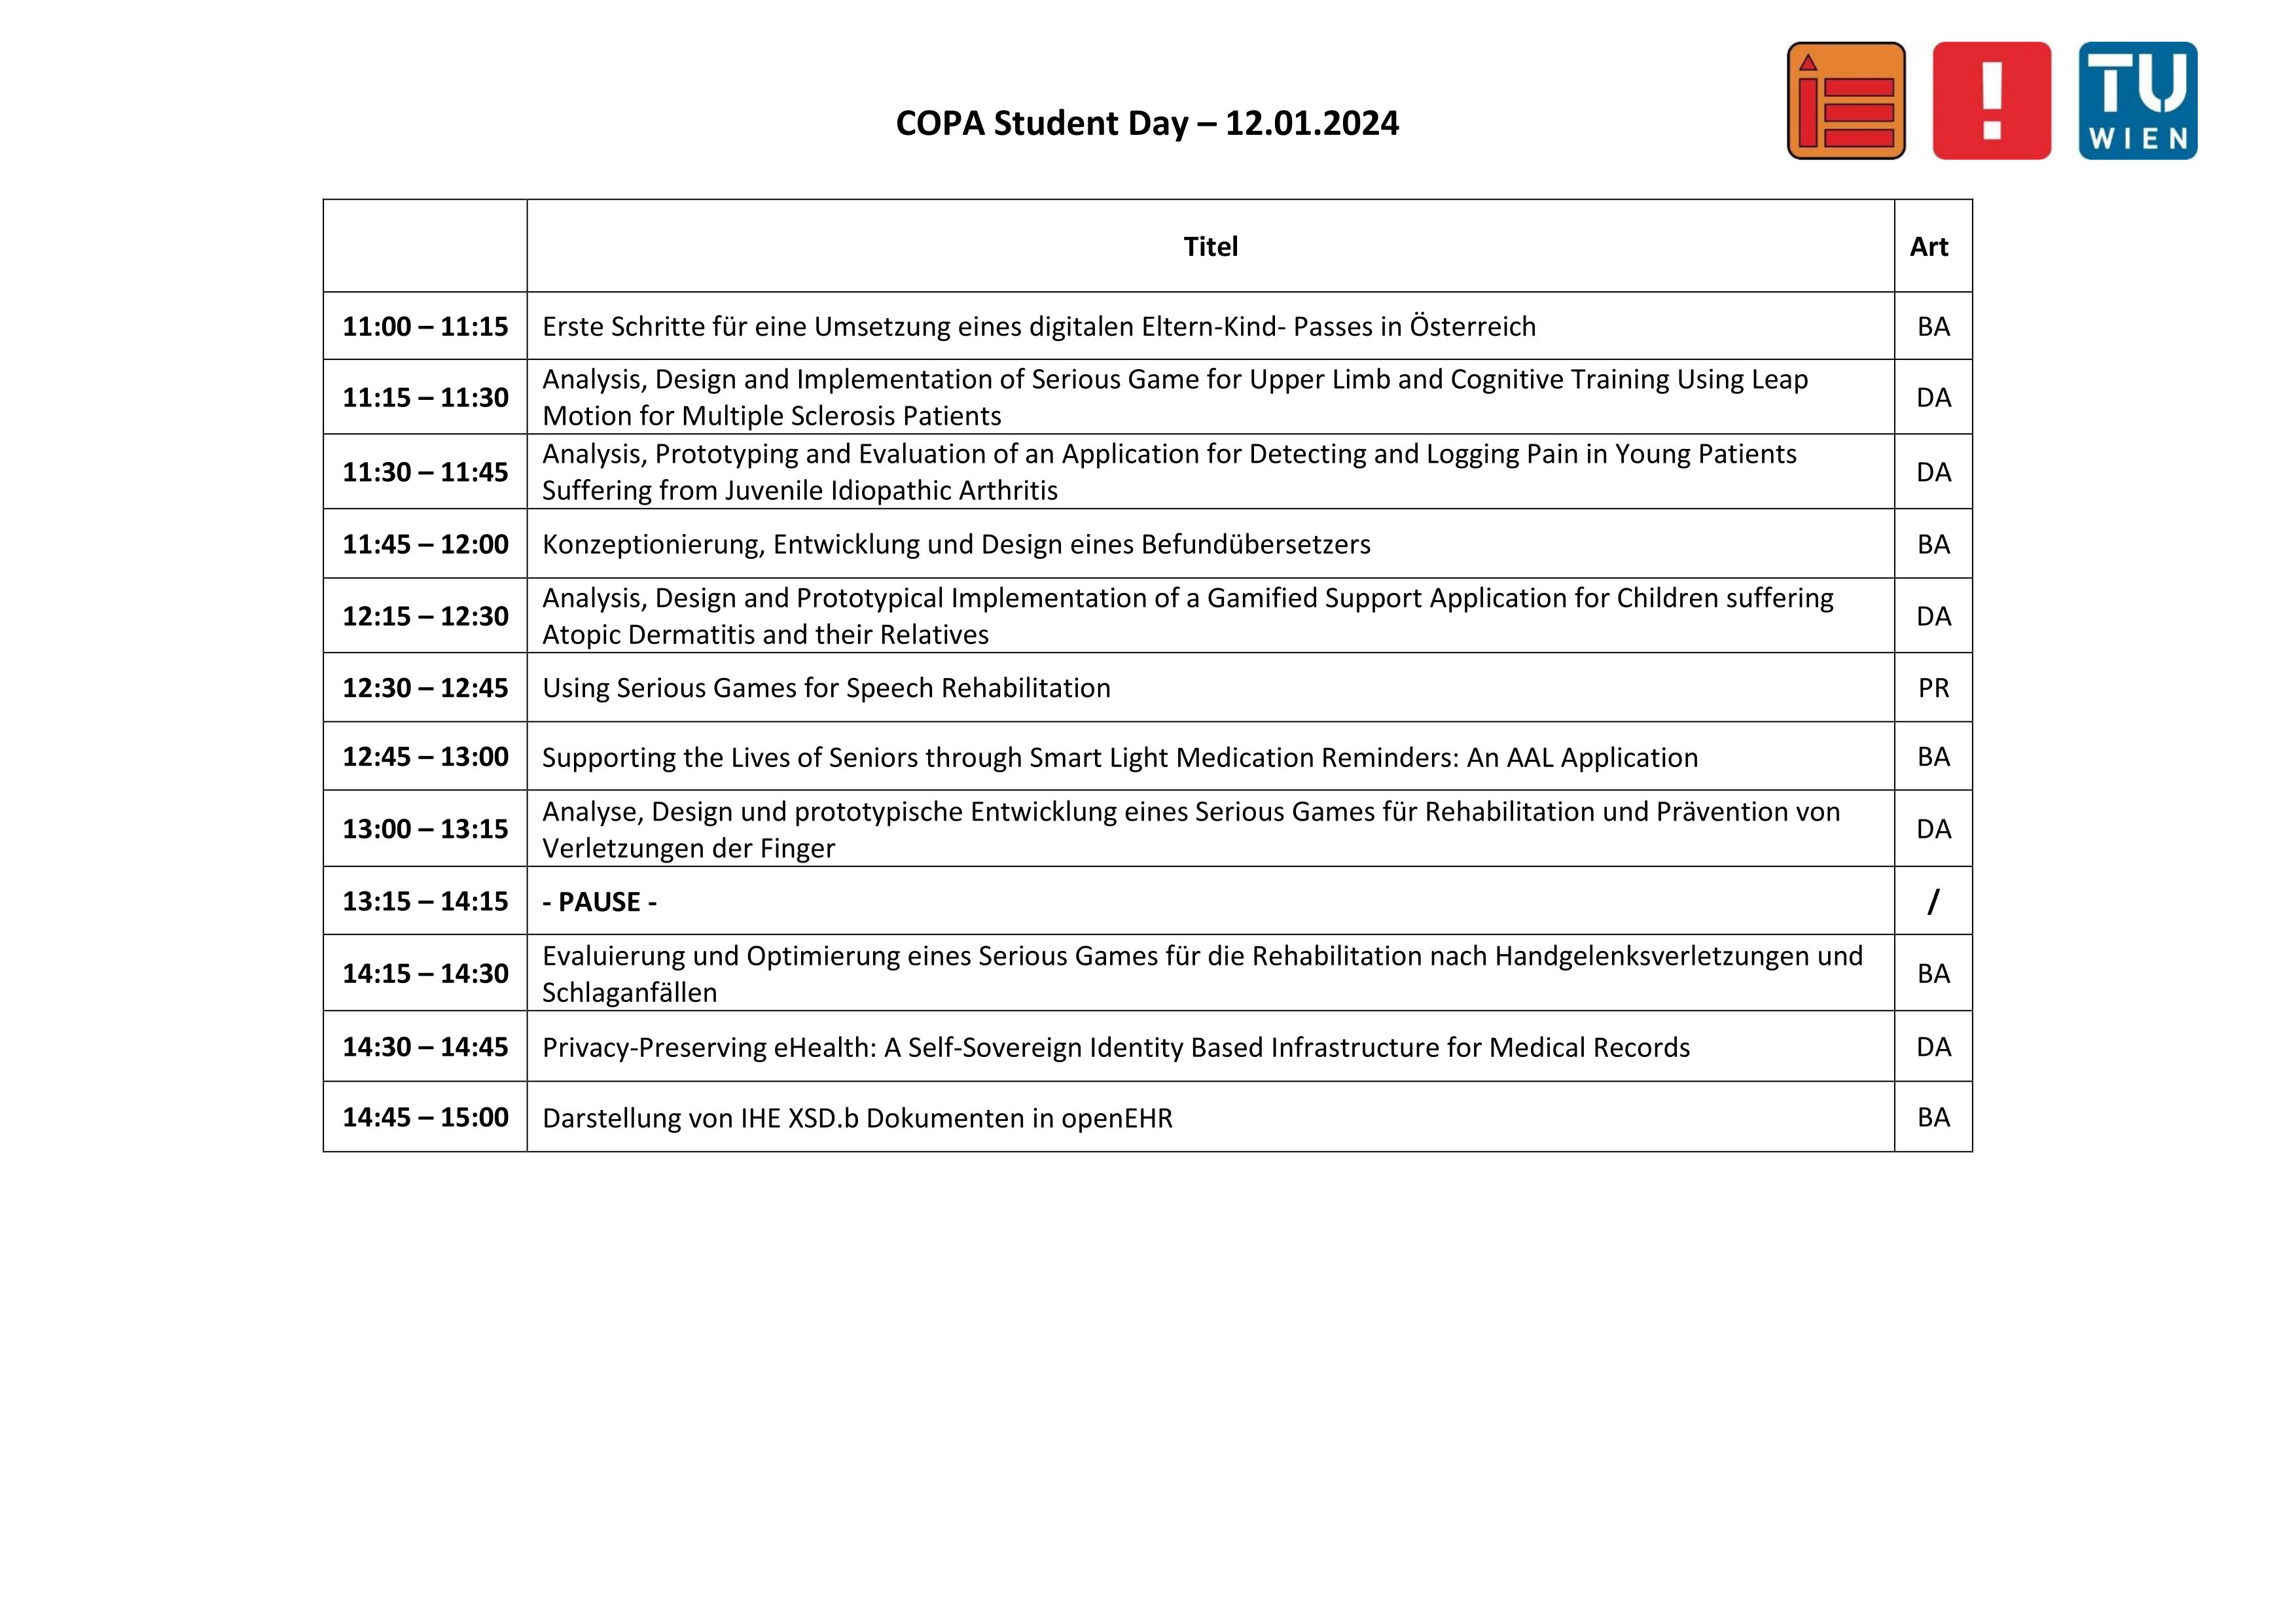 COPA Student Day Programm 11.11.2022